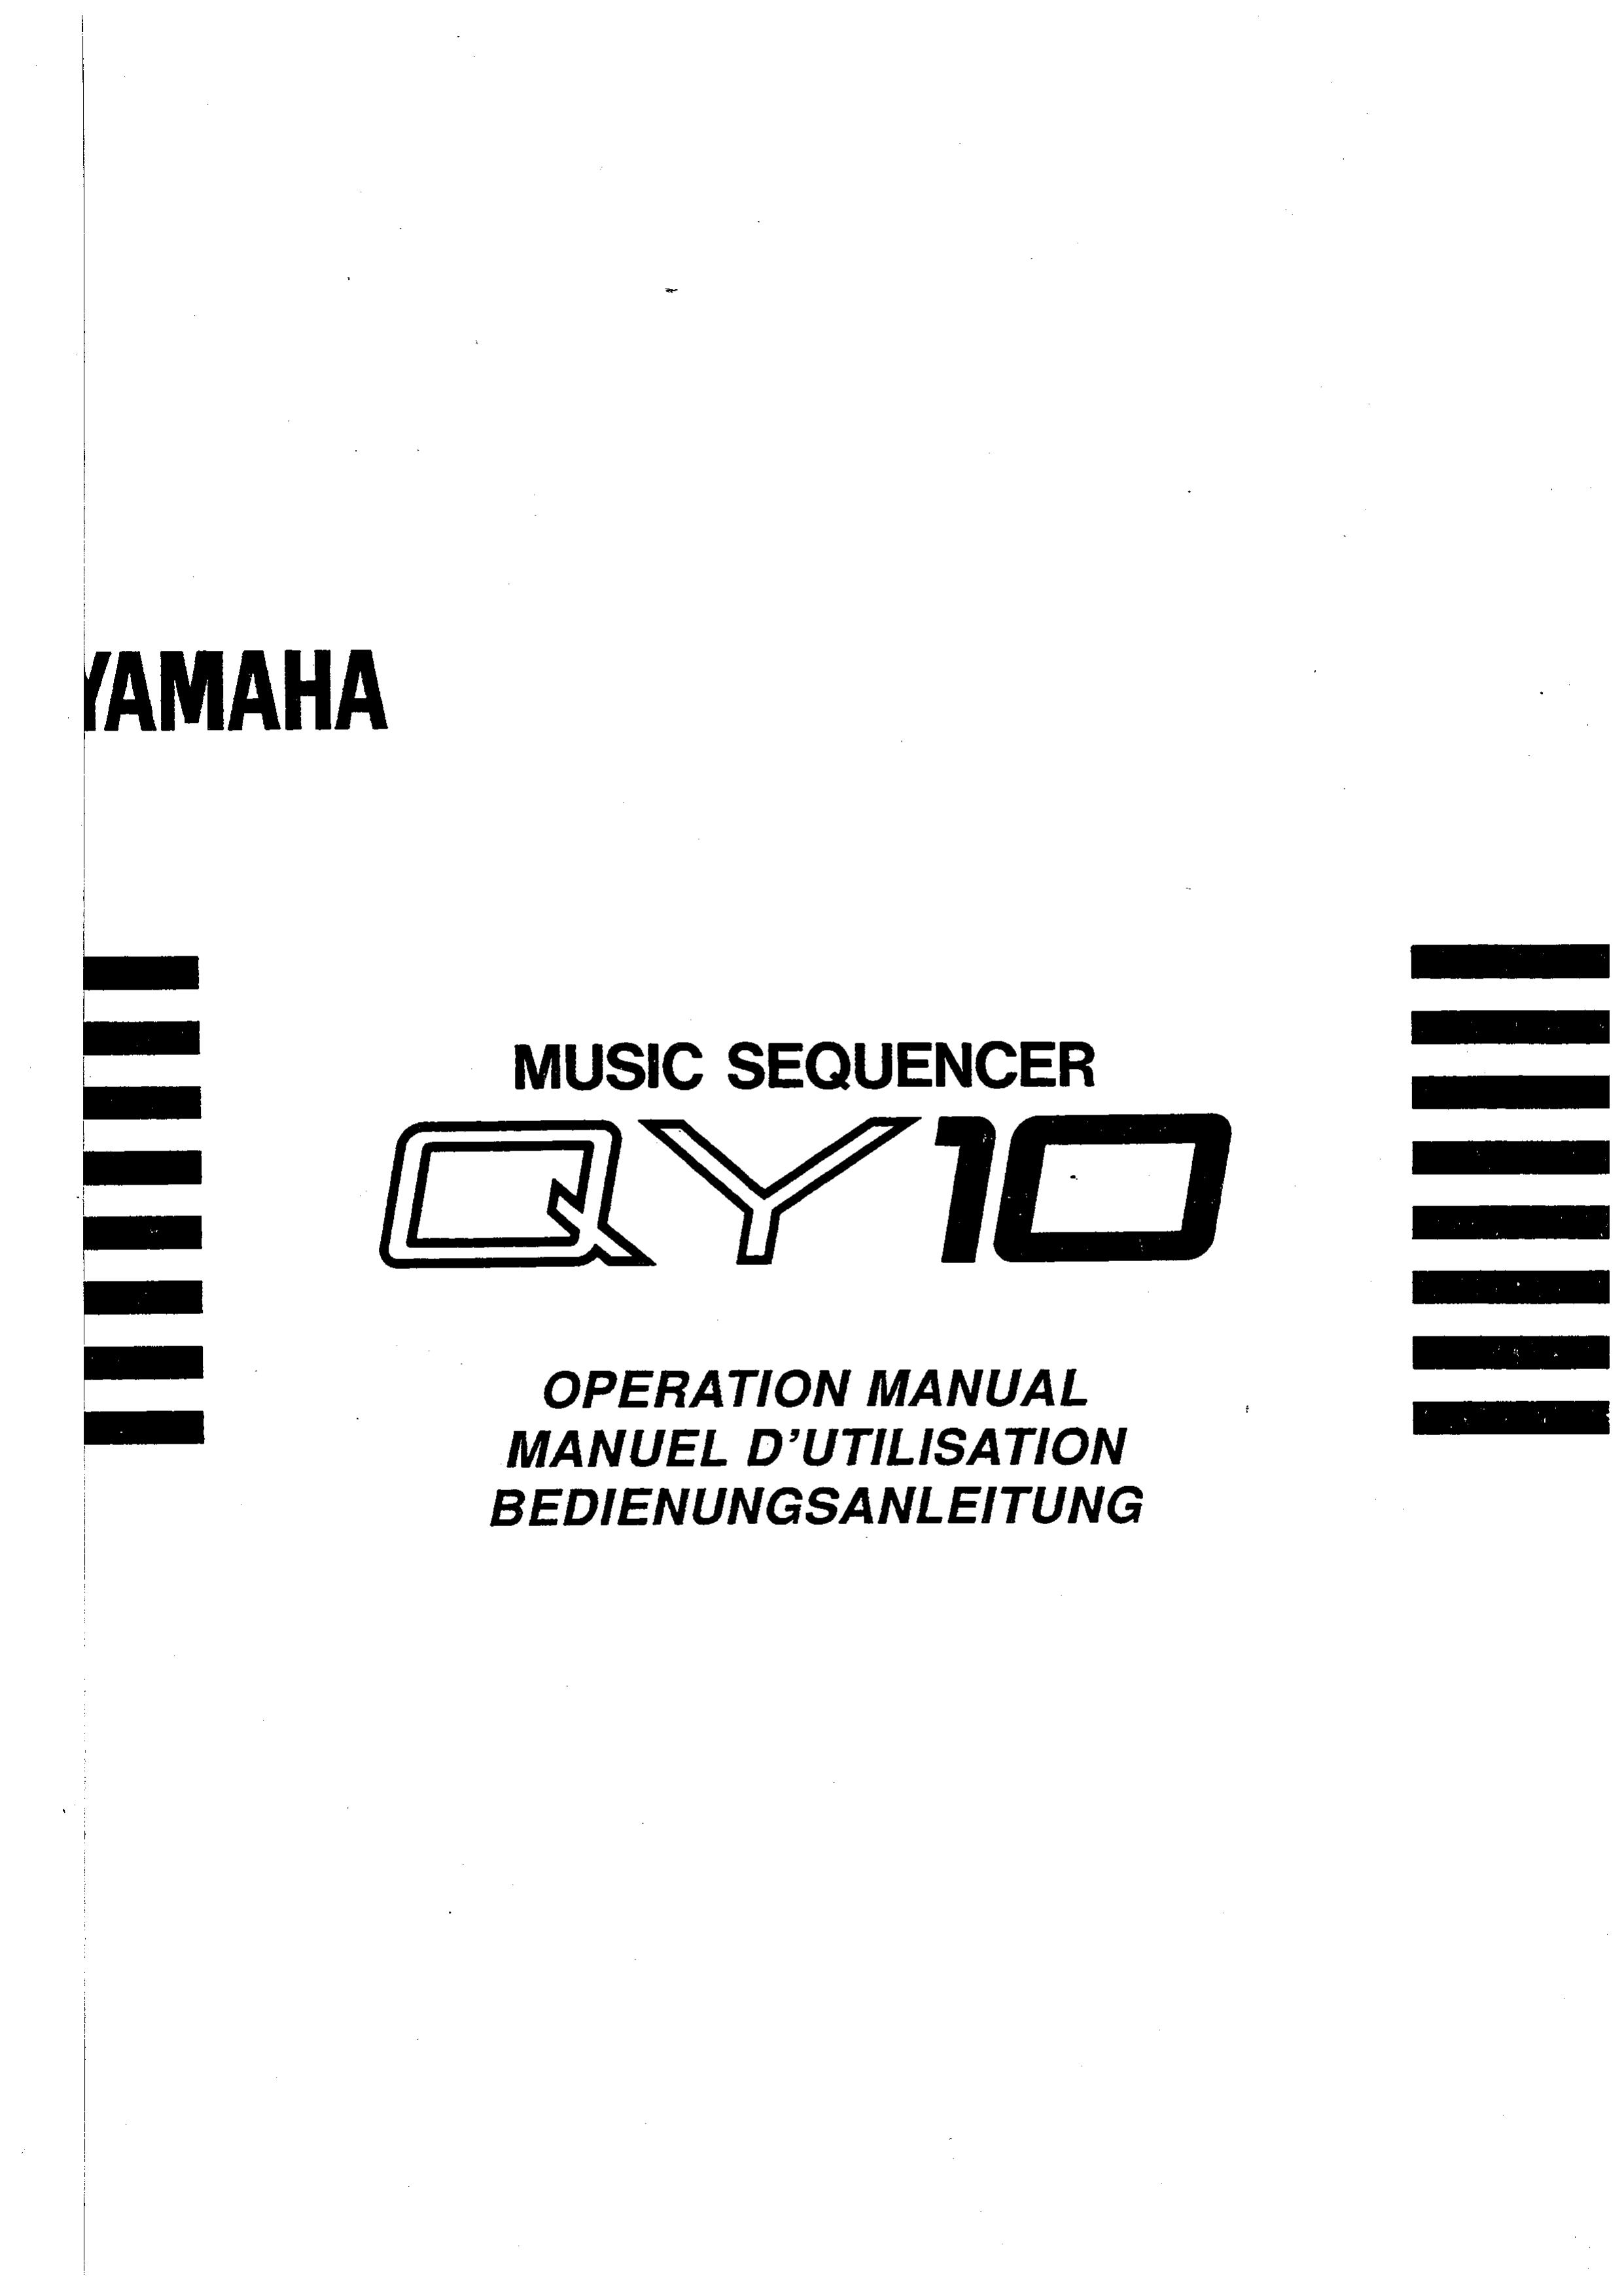 Yamaha QY10 Recording Equipment User Manual